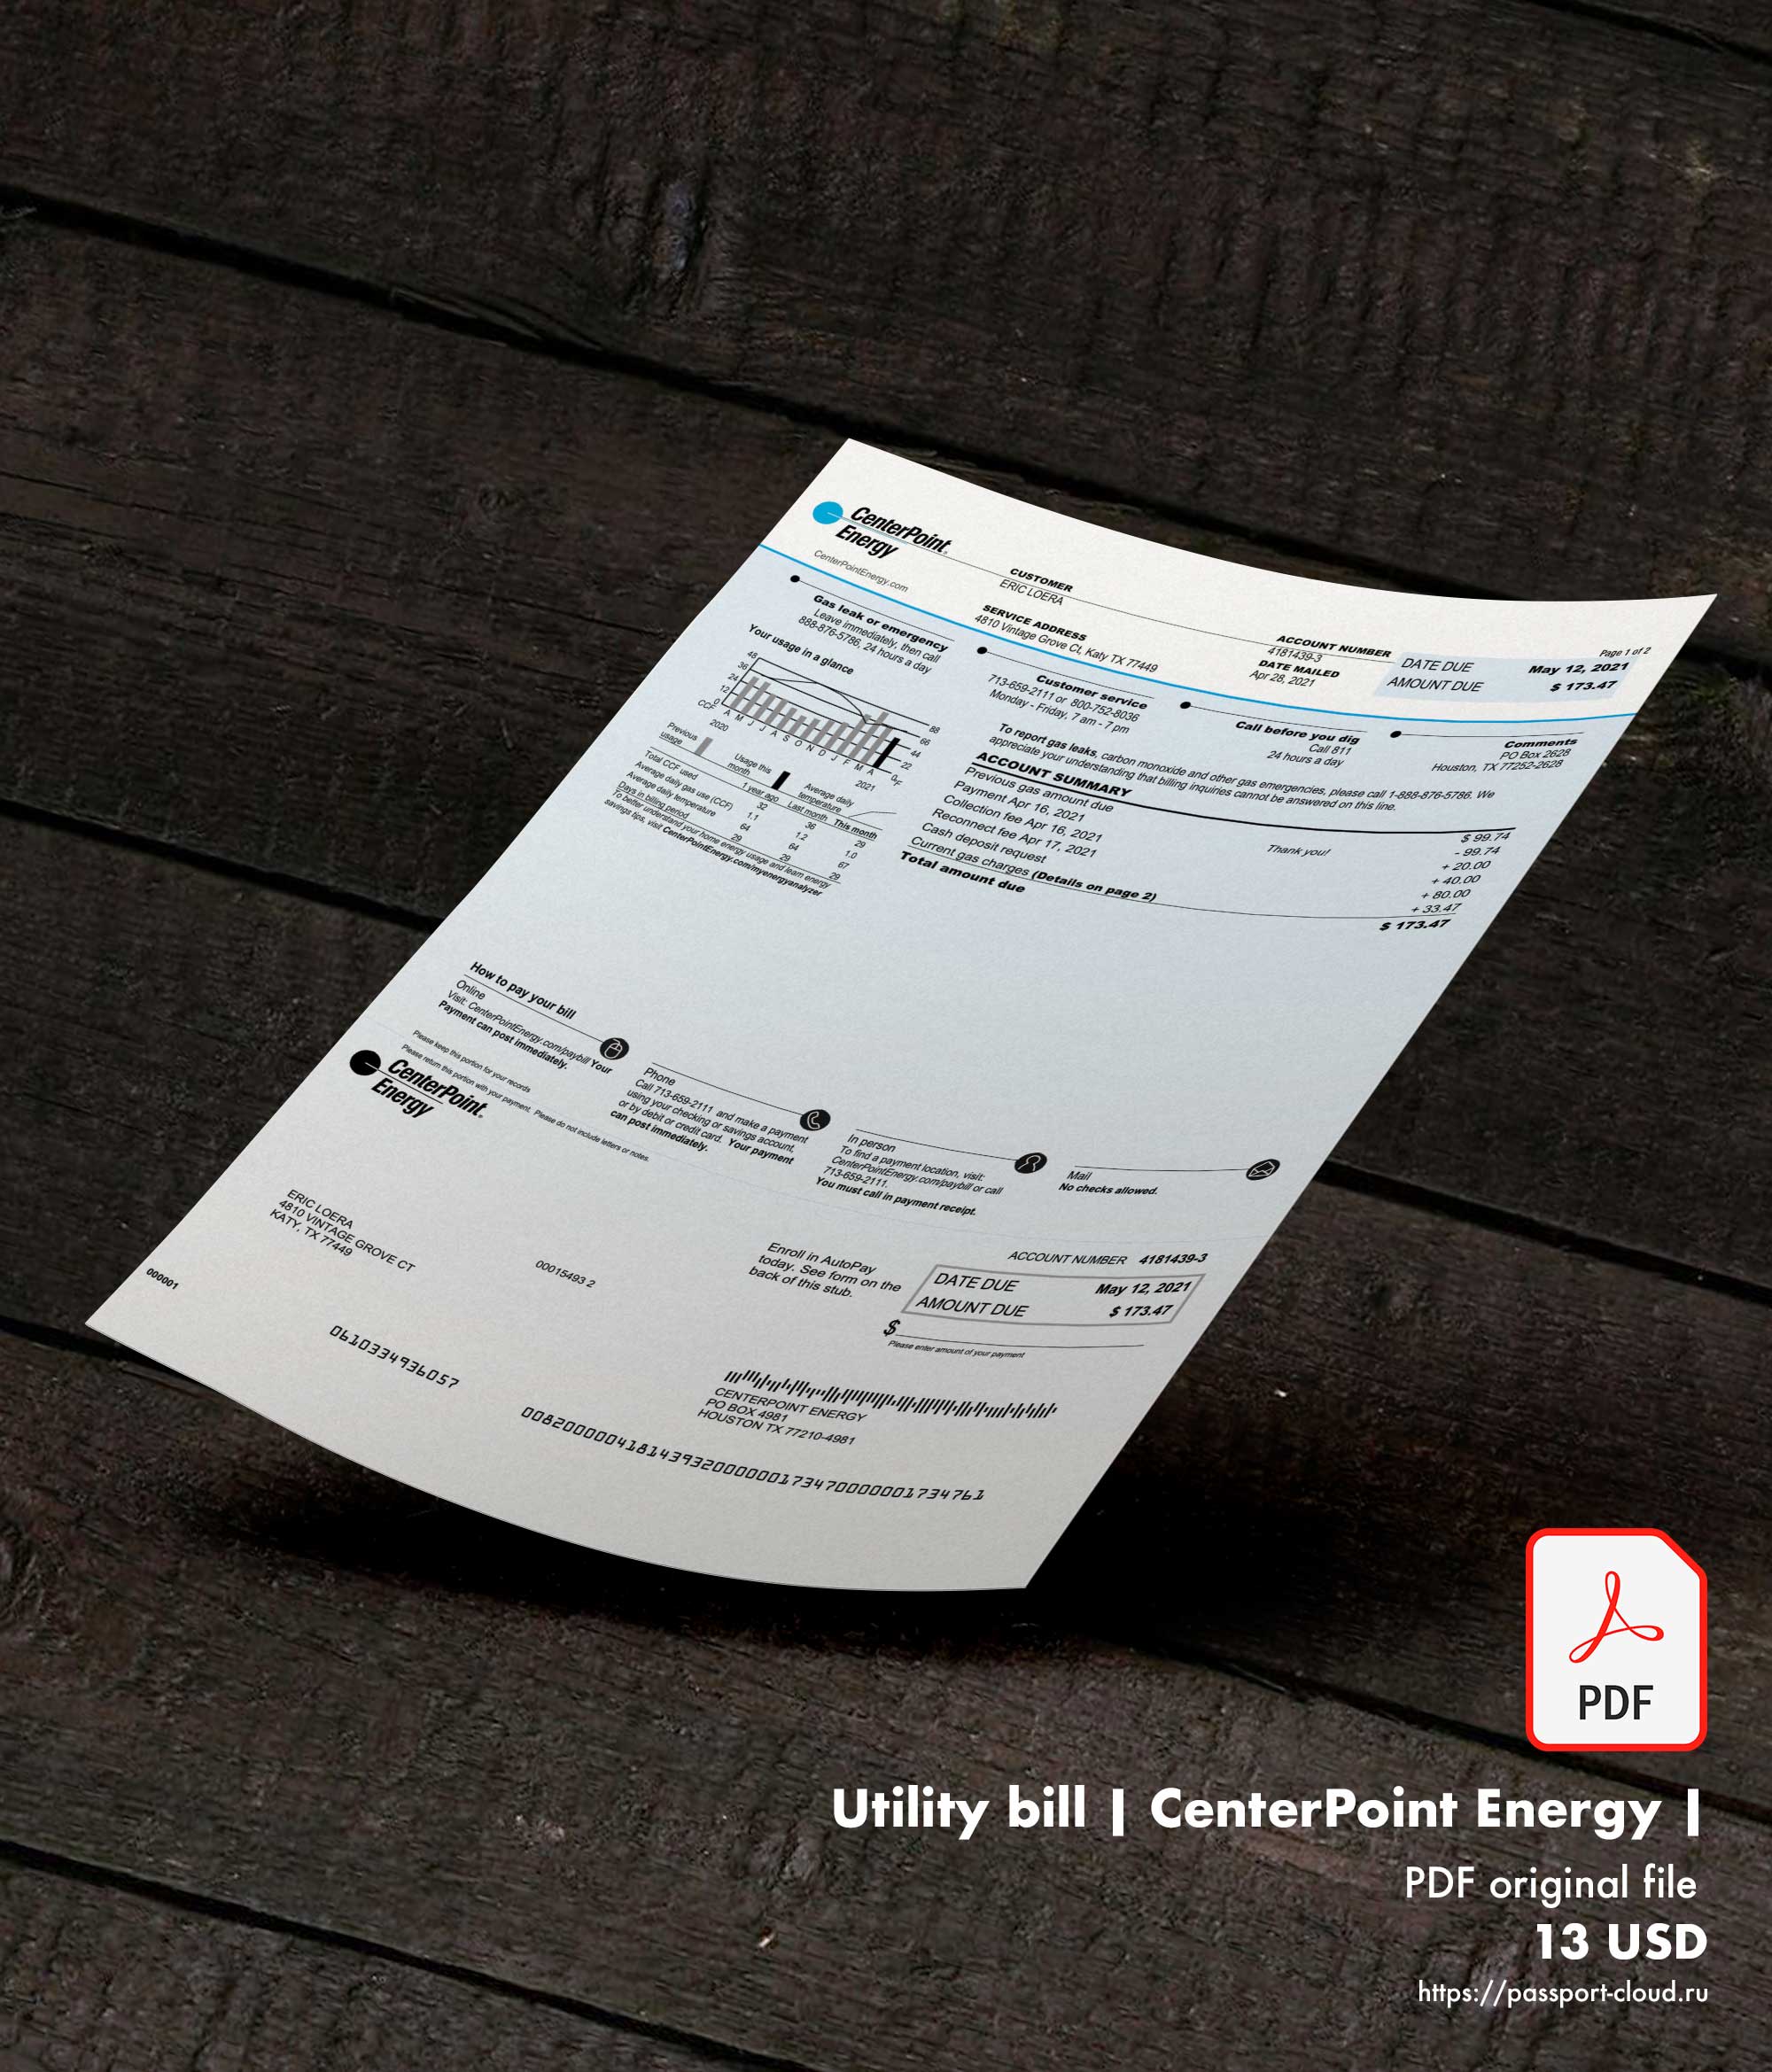 Utility bill | CenterPoint Energy | USA |1